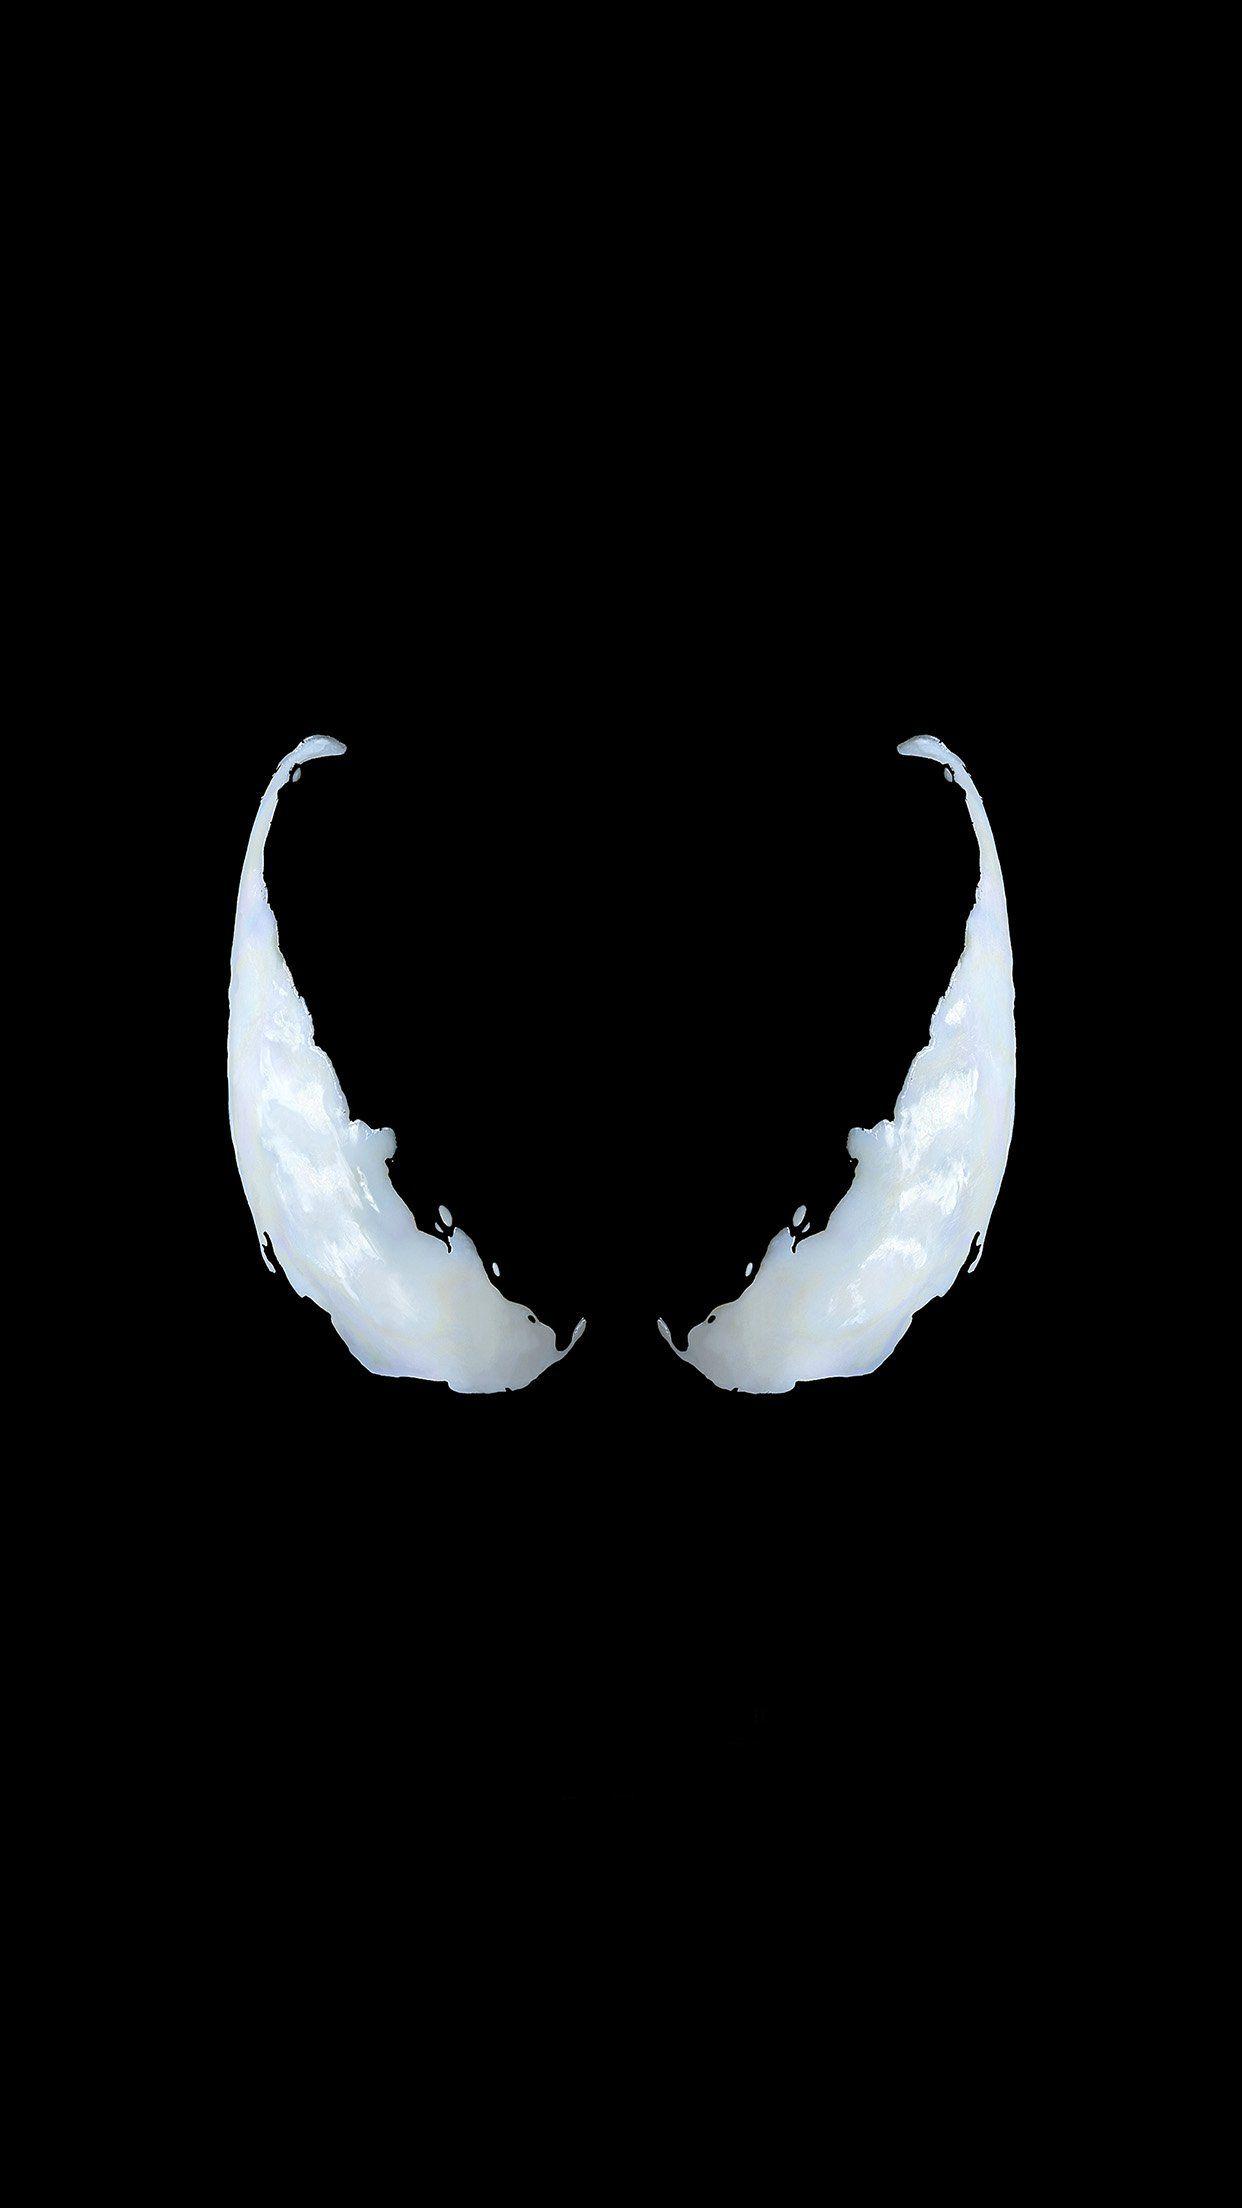 iPhone X wallpaper. marvel venom logo dark eye art simple minimal